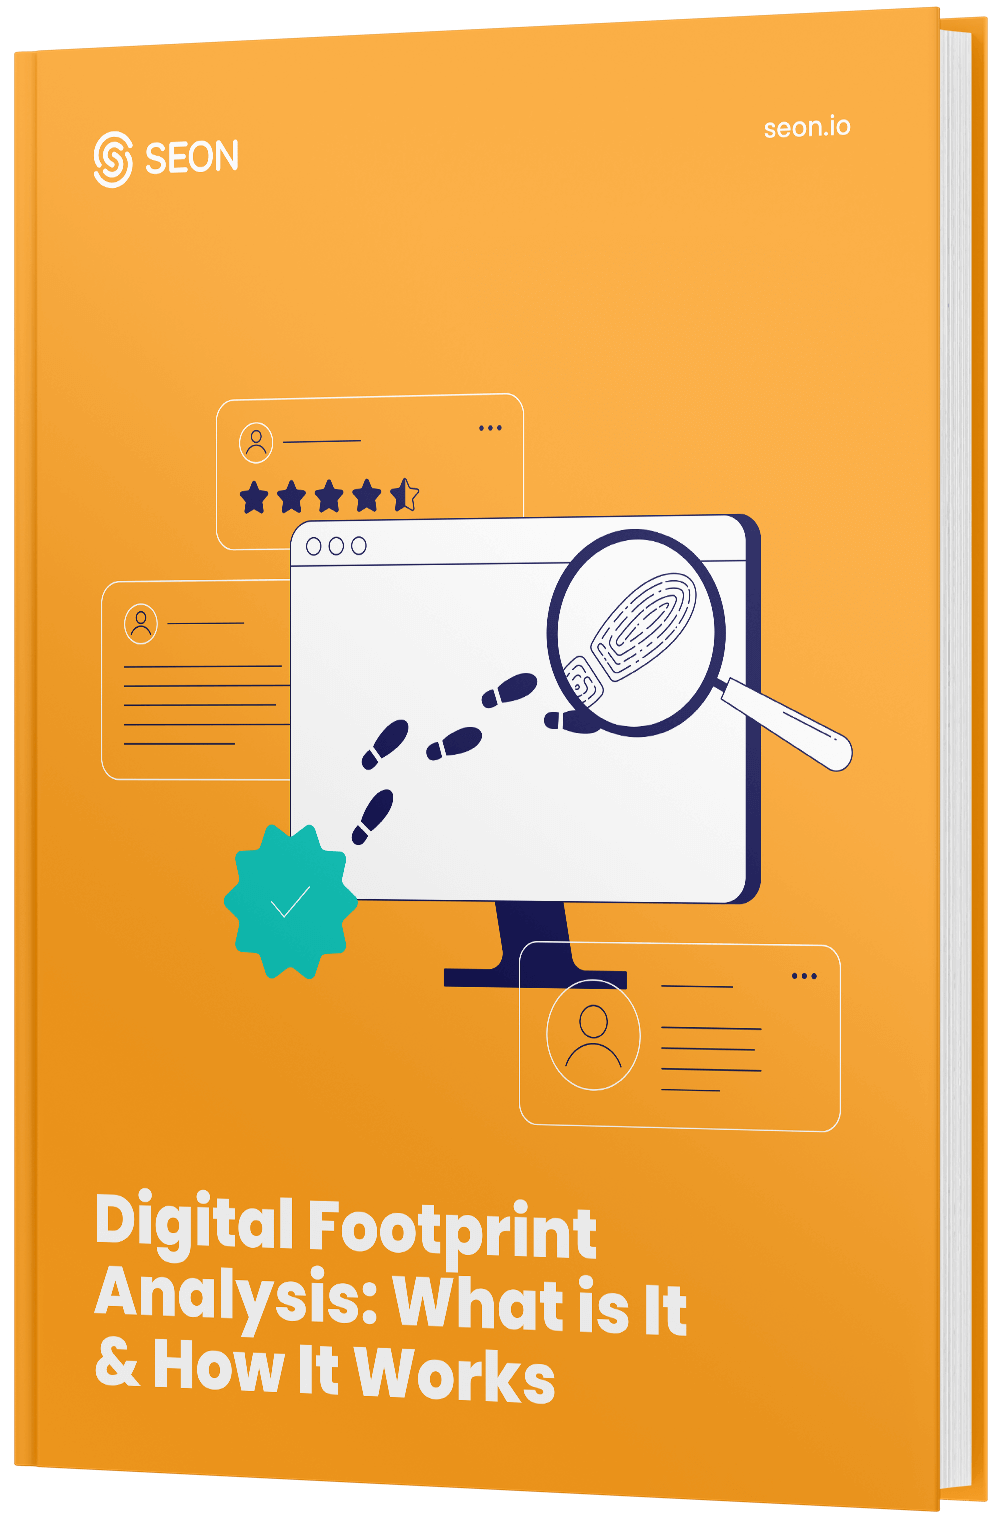 Digital Footprinting Analysis for Fraud Prevention: Full Guide